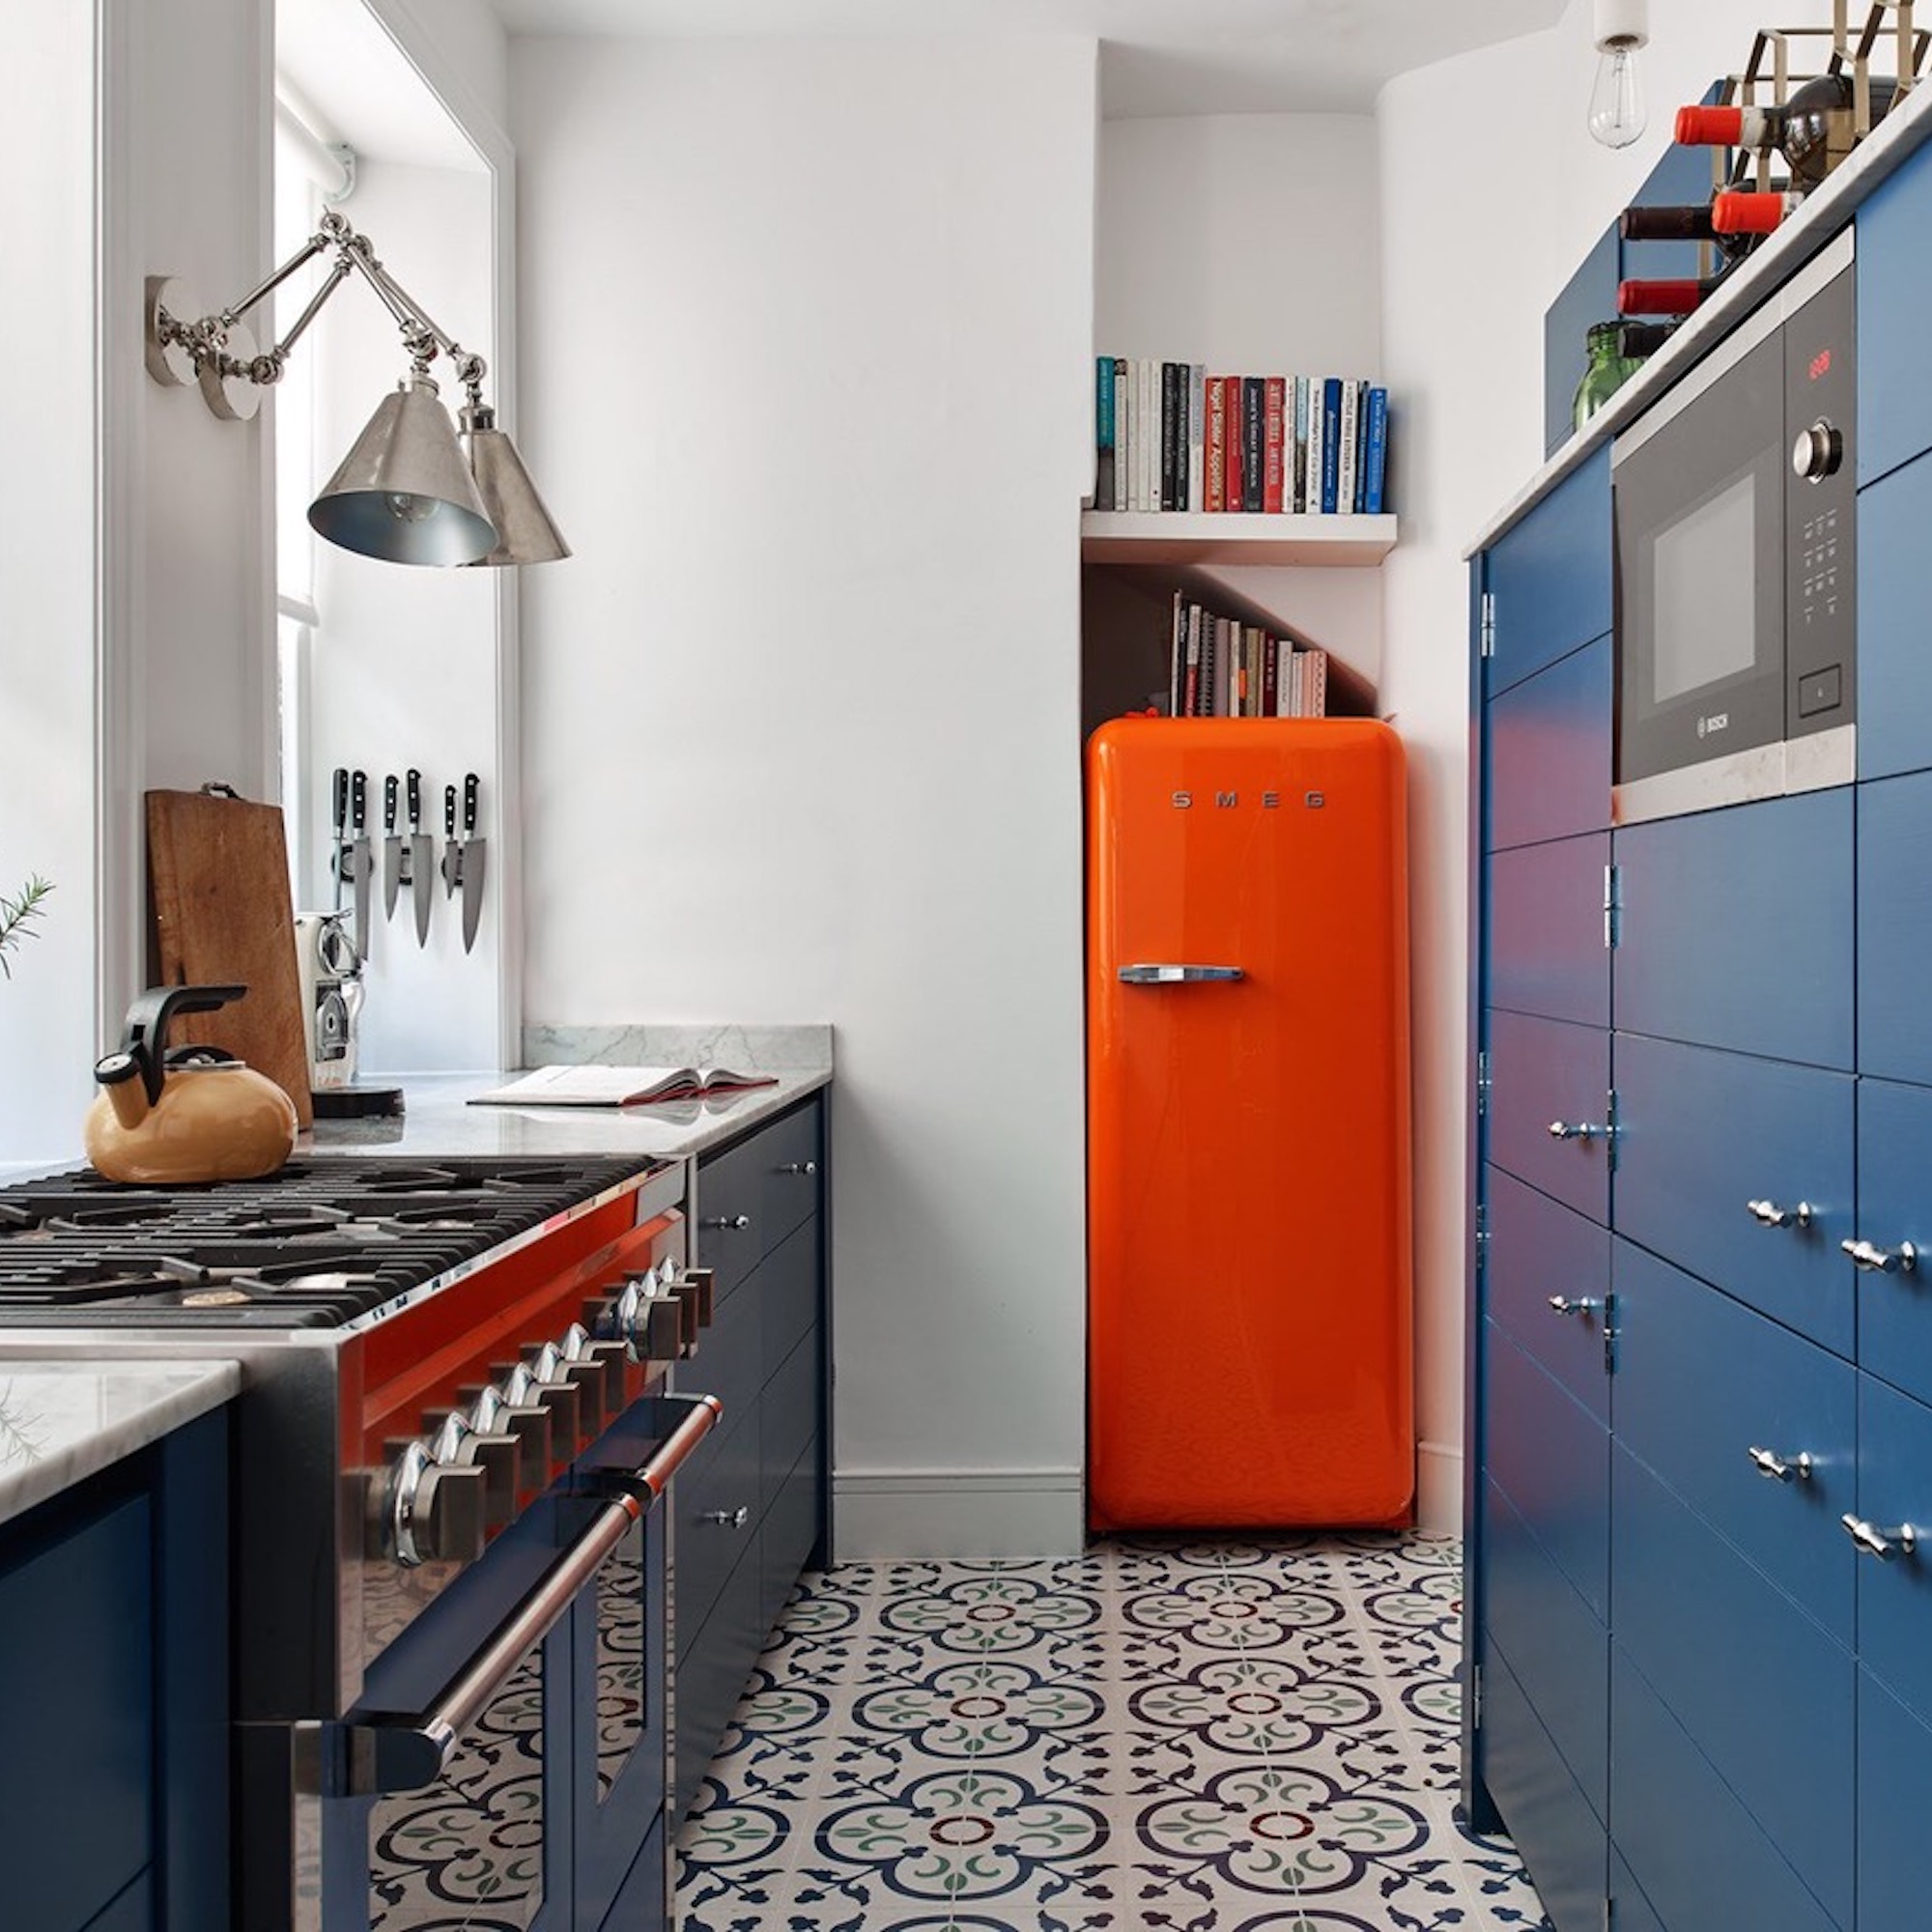 Narrow kitchen ideas: 10 ways to maximize space and interest